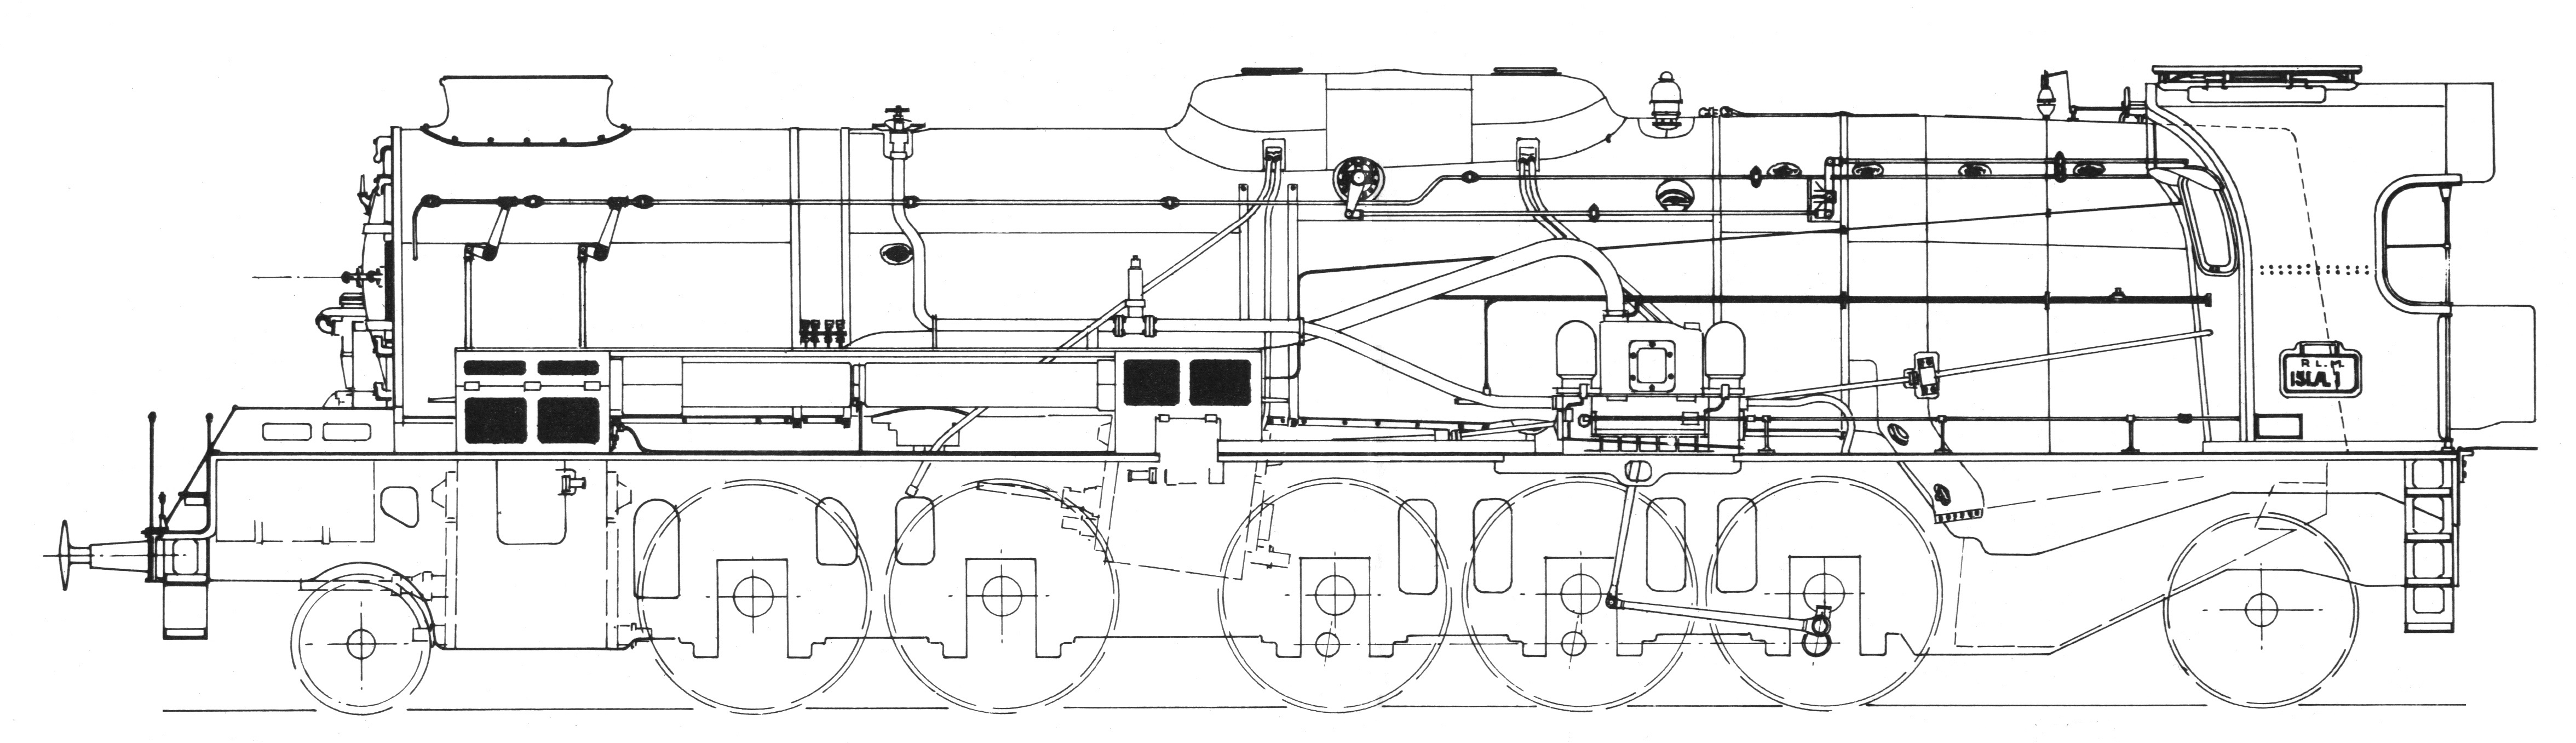 151 a型蒸汽机车左侧略图,可见车架为1个